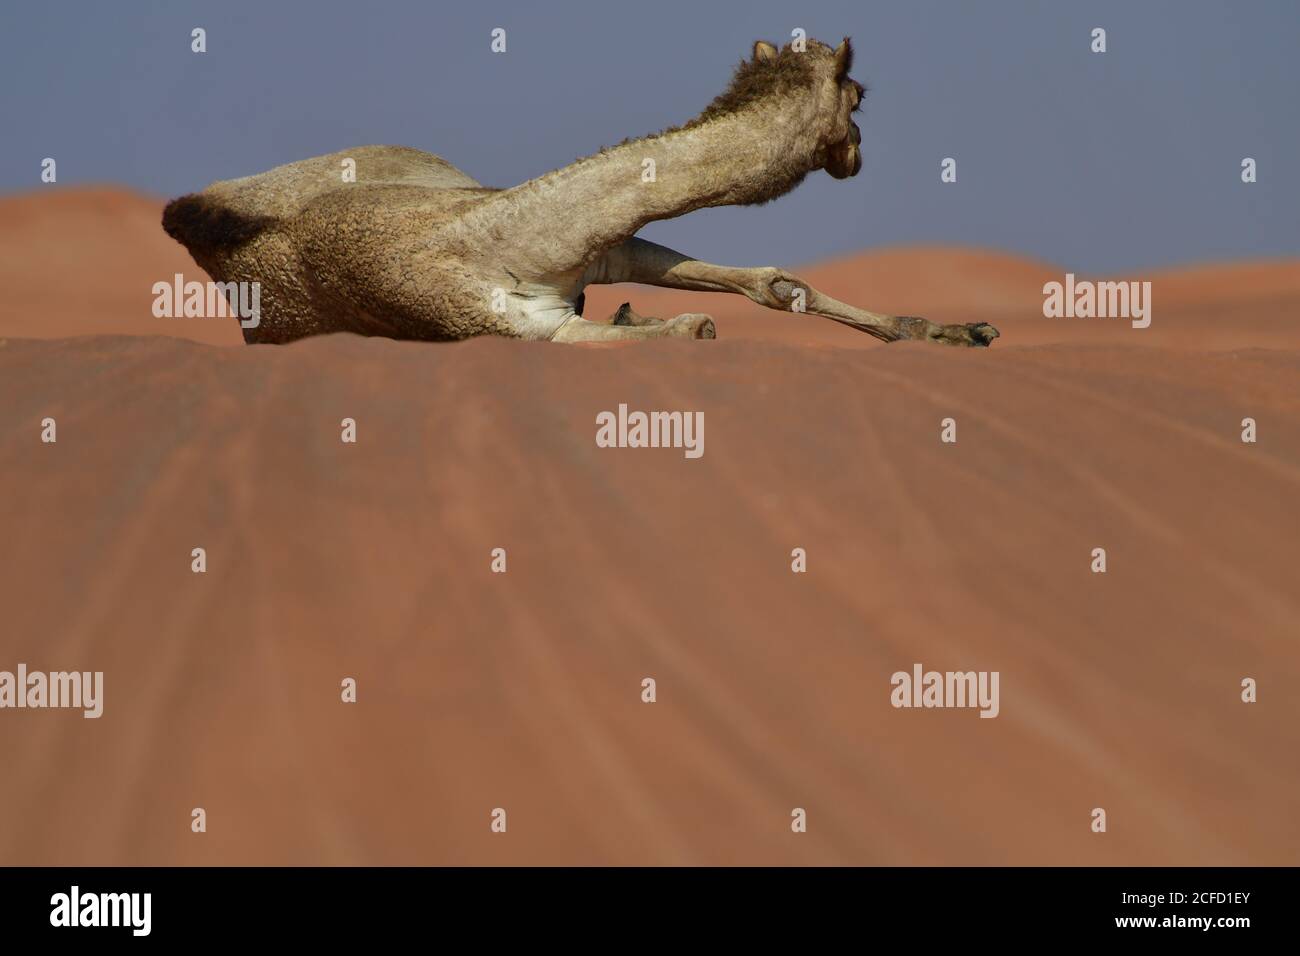 Arabian Camel (dromedary) resting & exhibiting their capabilities of surviving in the harsh desert landscapes of the Arabian Peninsula landscape. Stock Photo